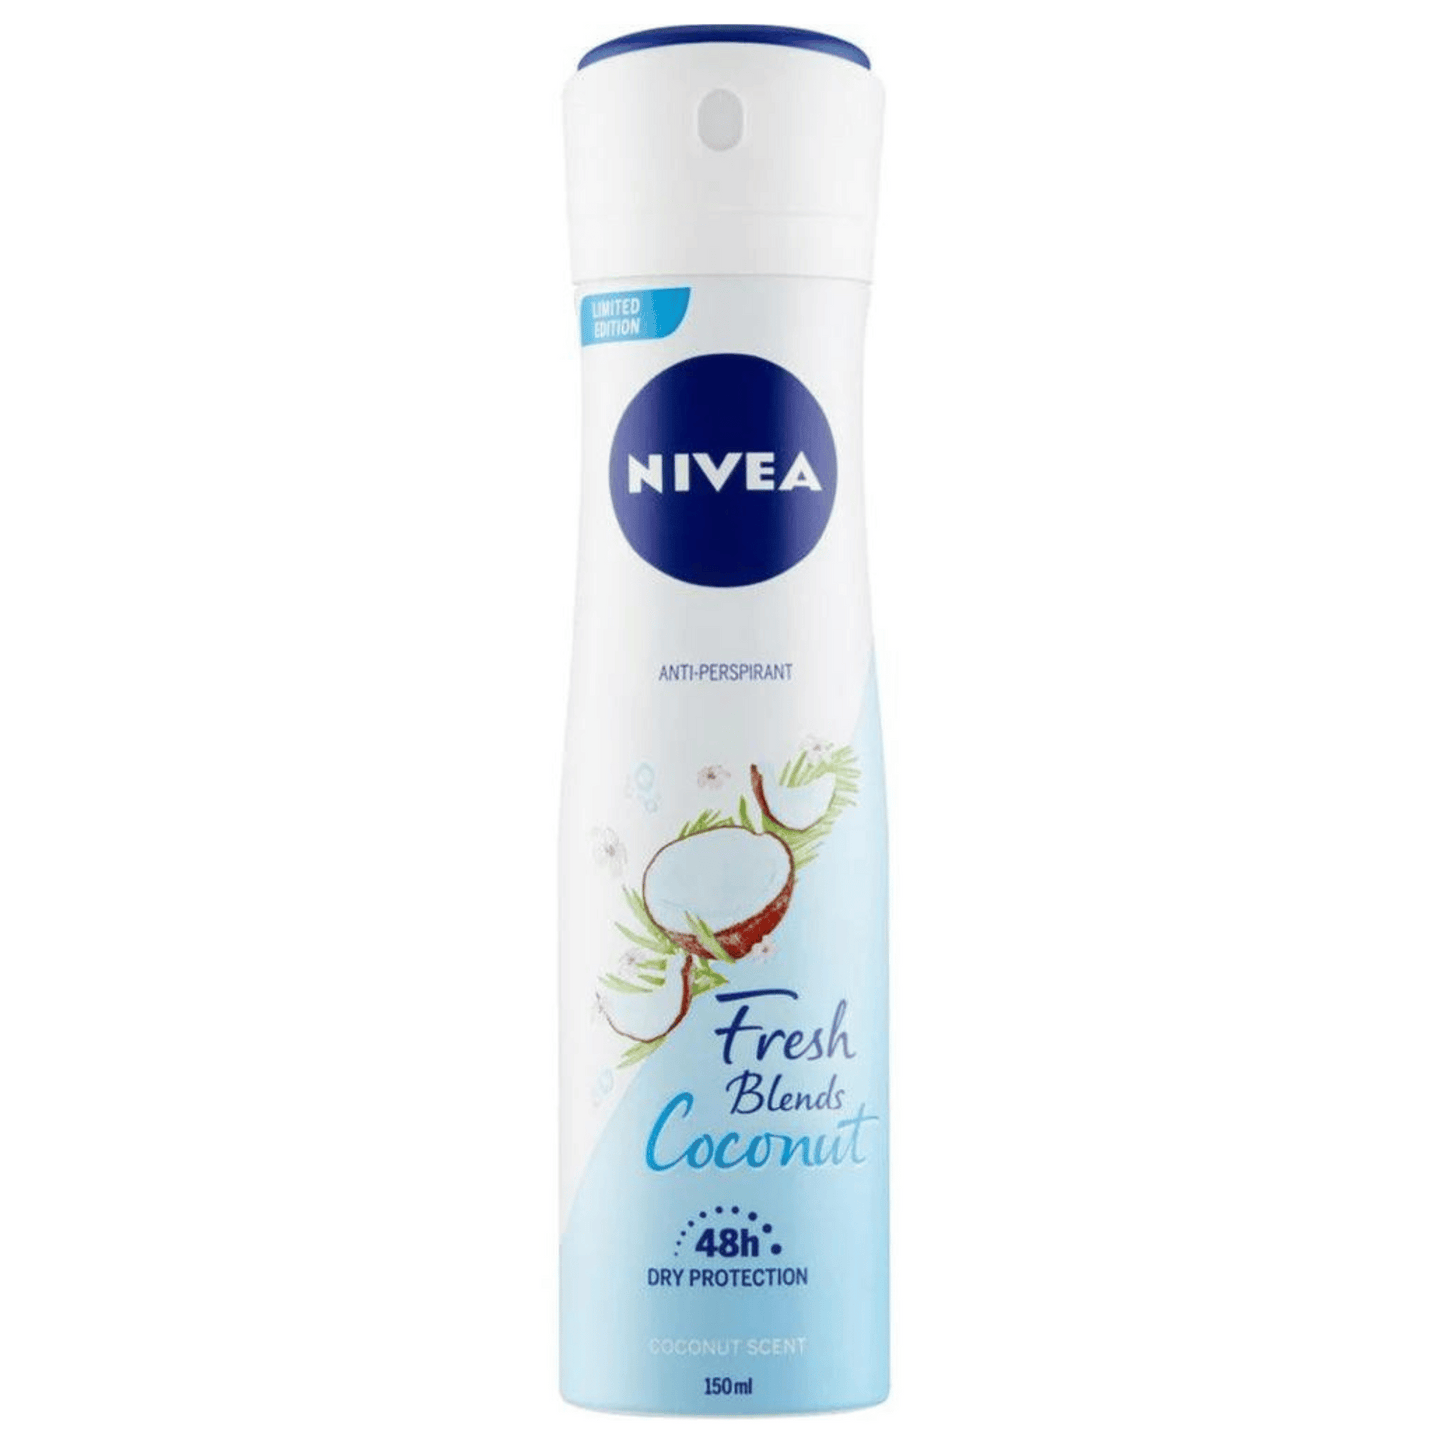 Primary Image of Women's Spray Fresh Blends Coconut Anti-Perspirant Deodorant